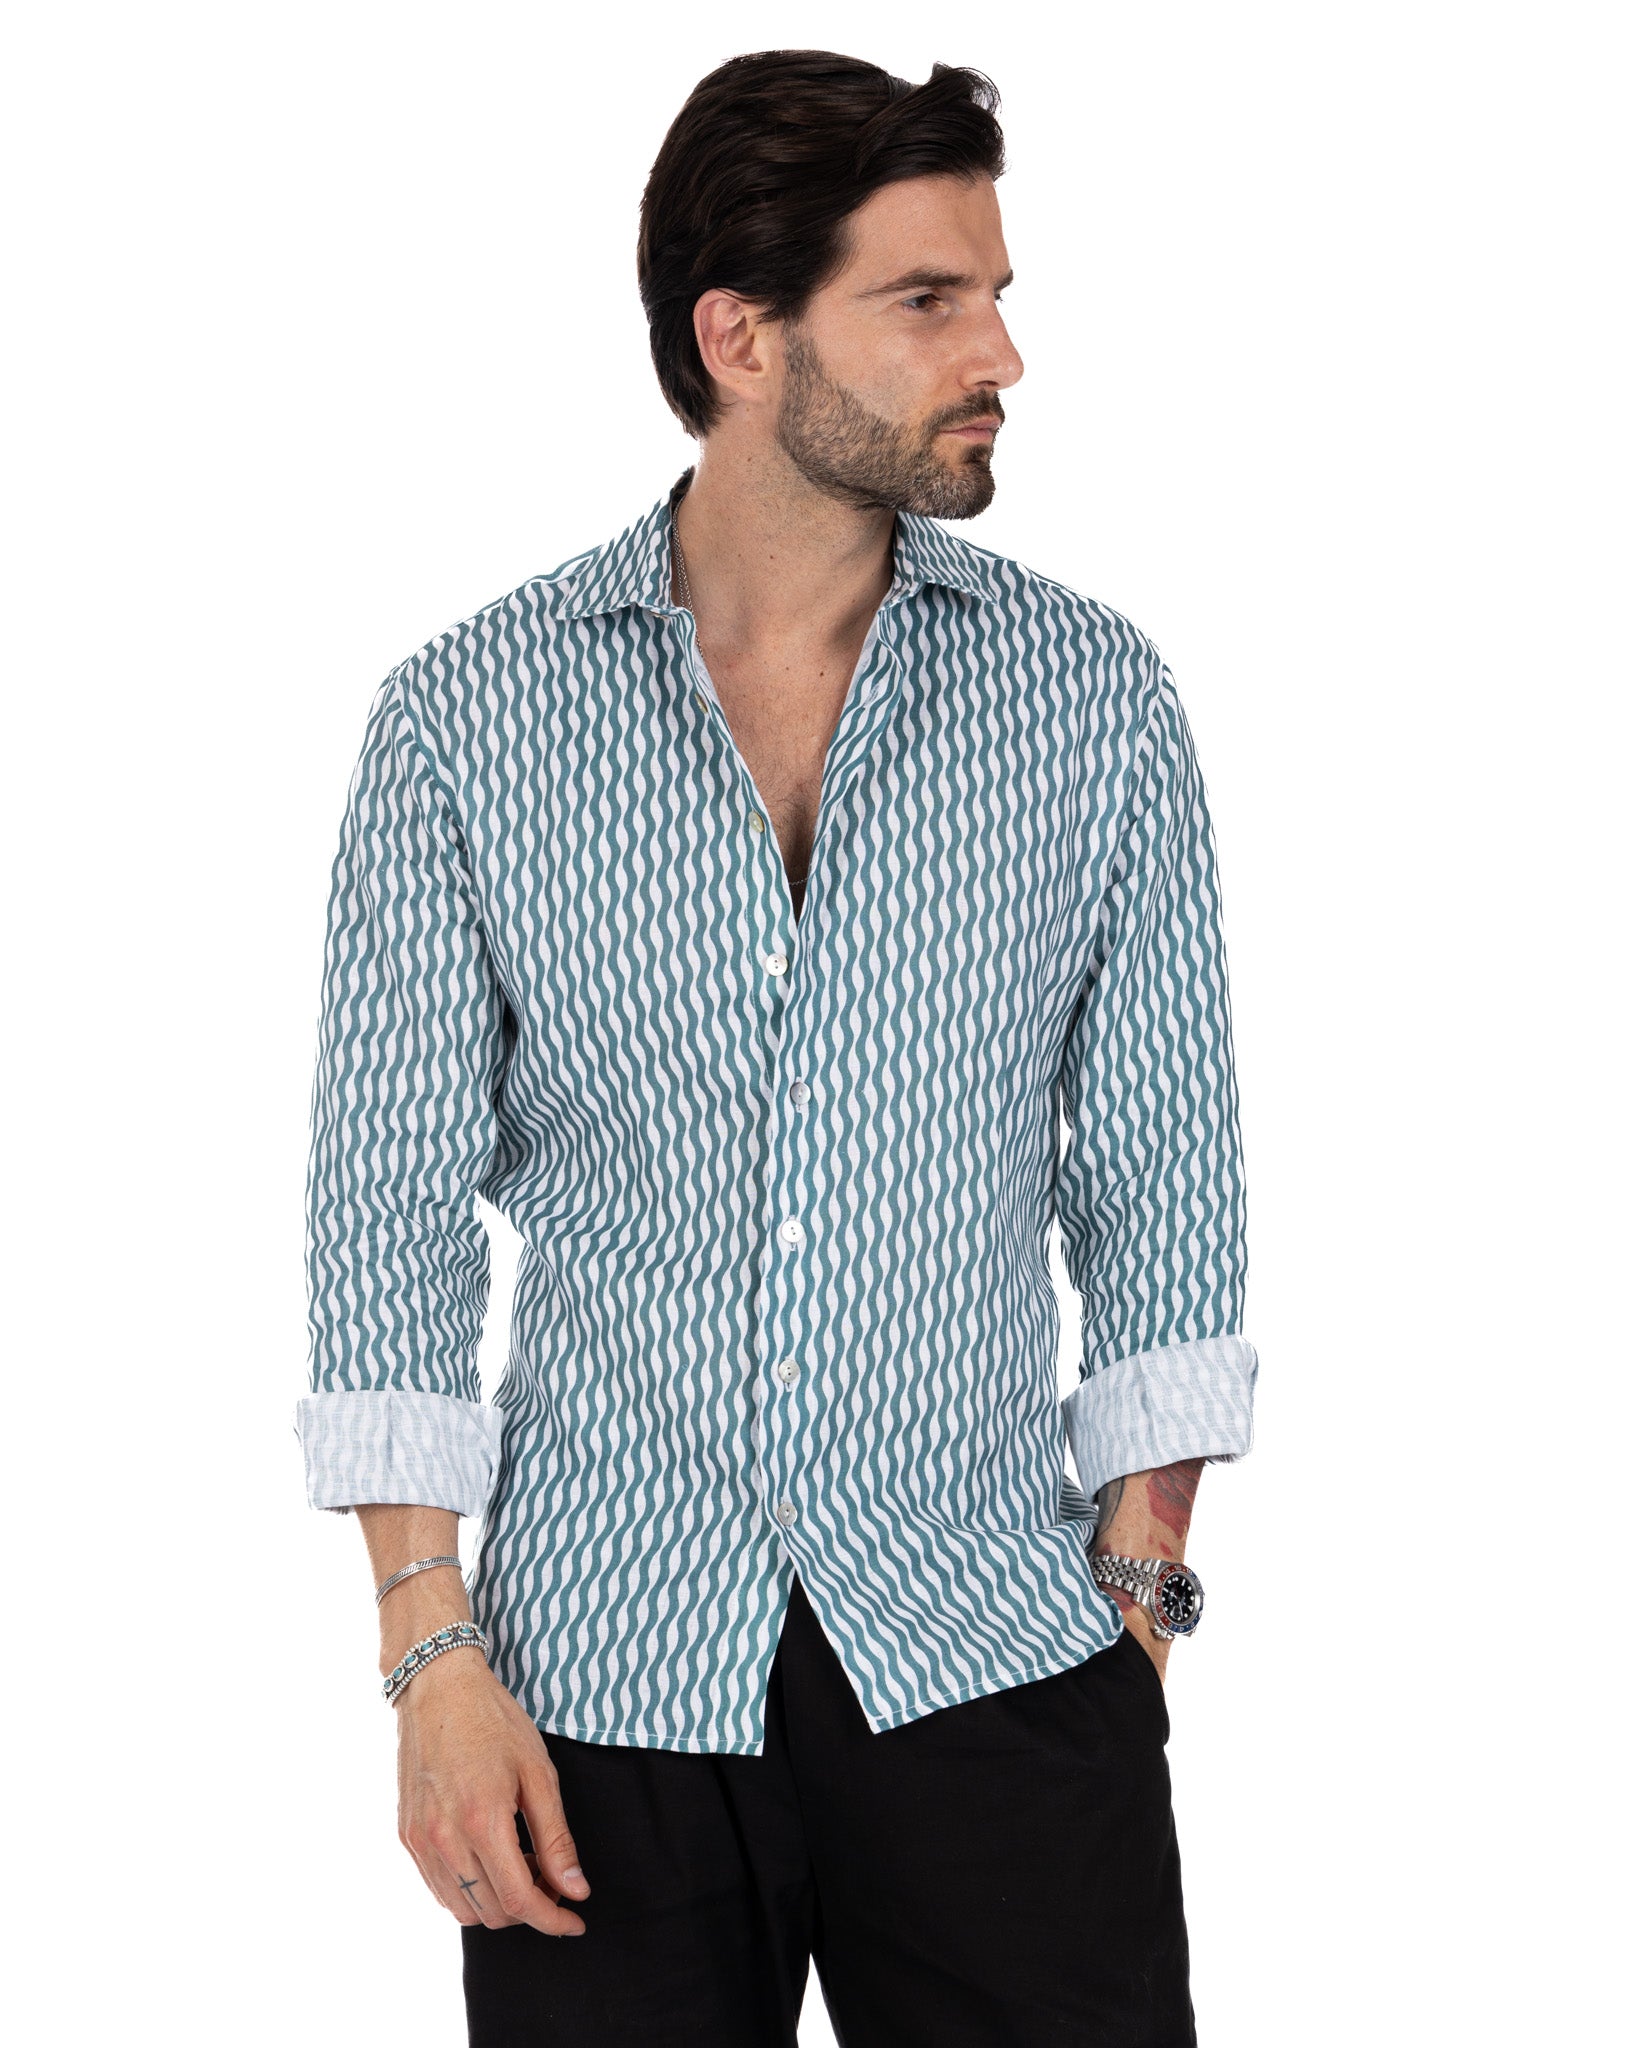 Onda - turquoise printed linen shirt